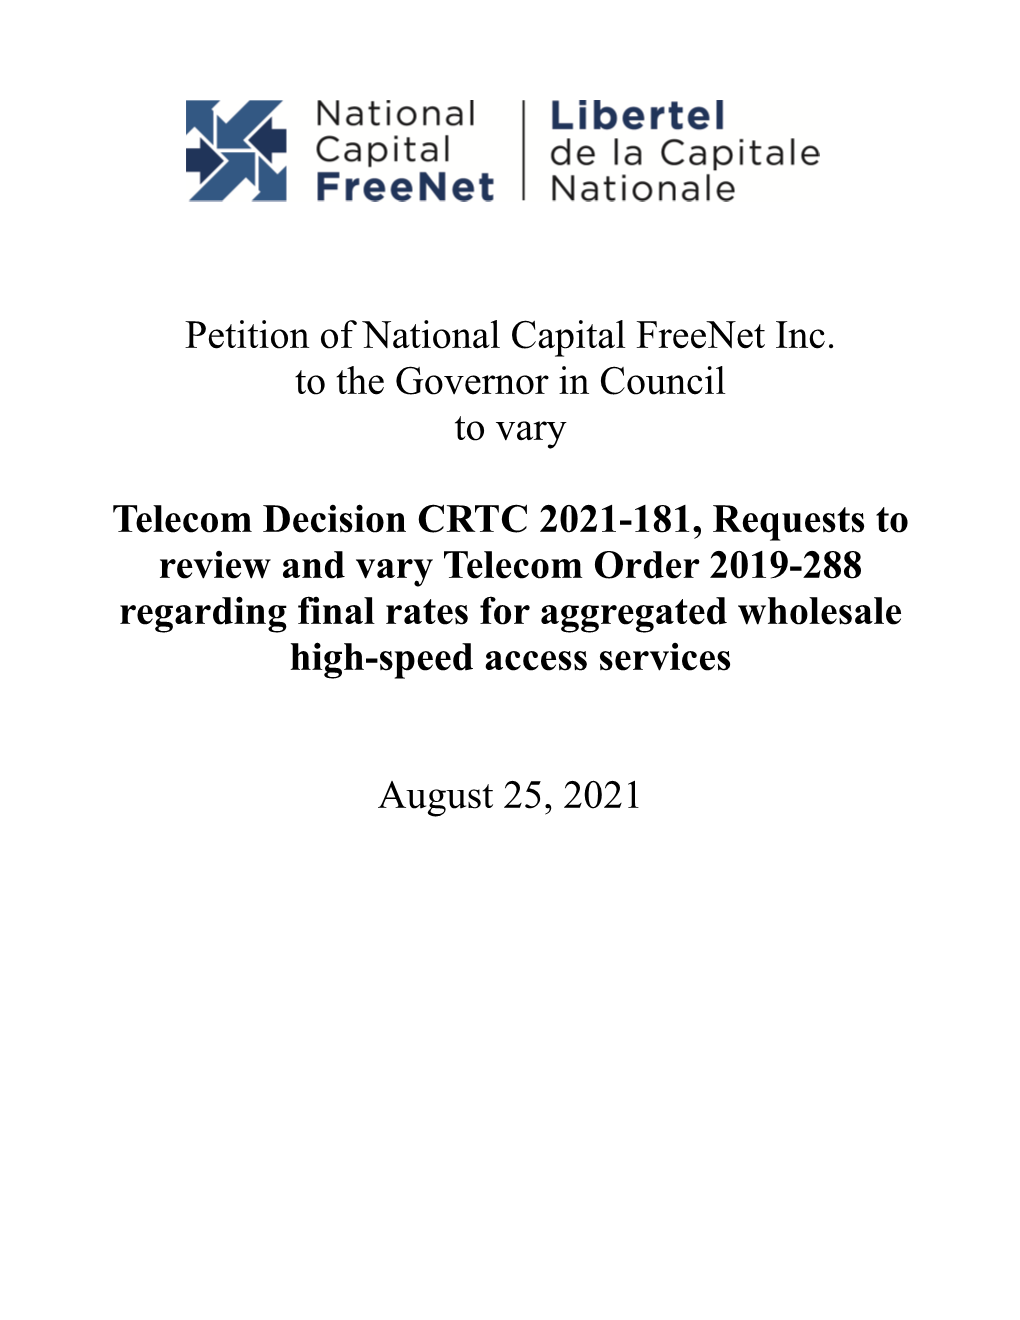 Petition of National Capital Freenet Inc-TDCRTC2021181-Aug2521